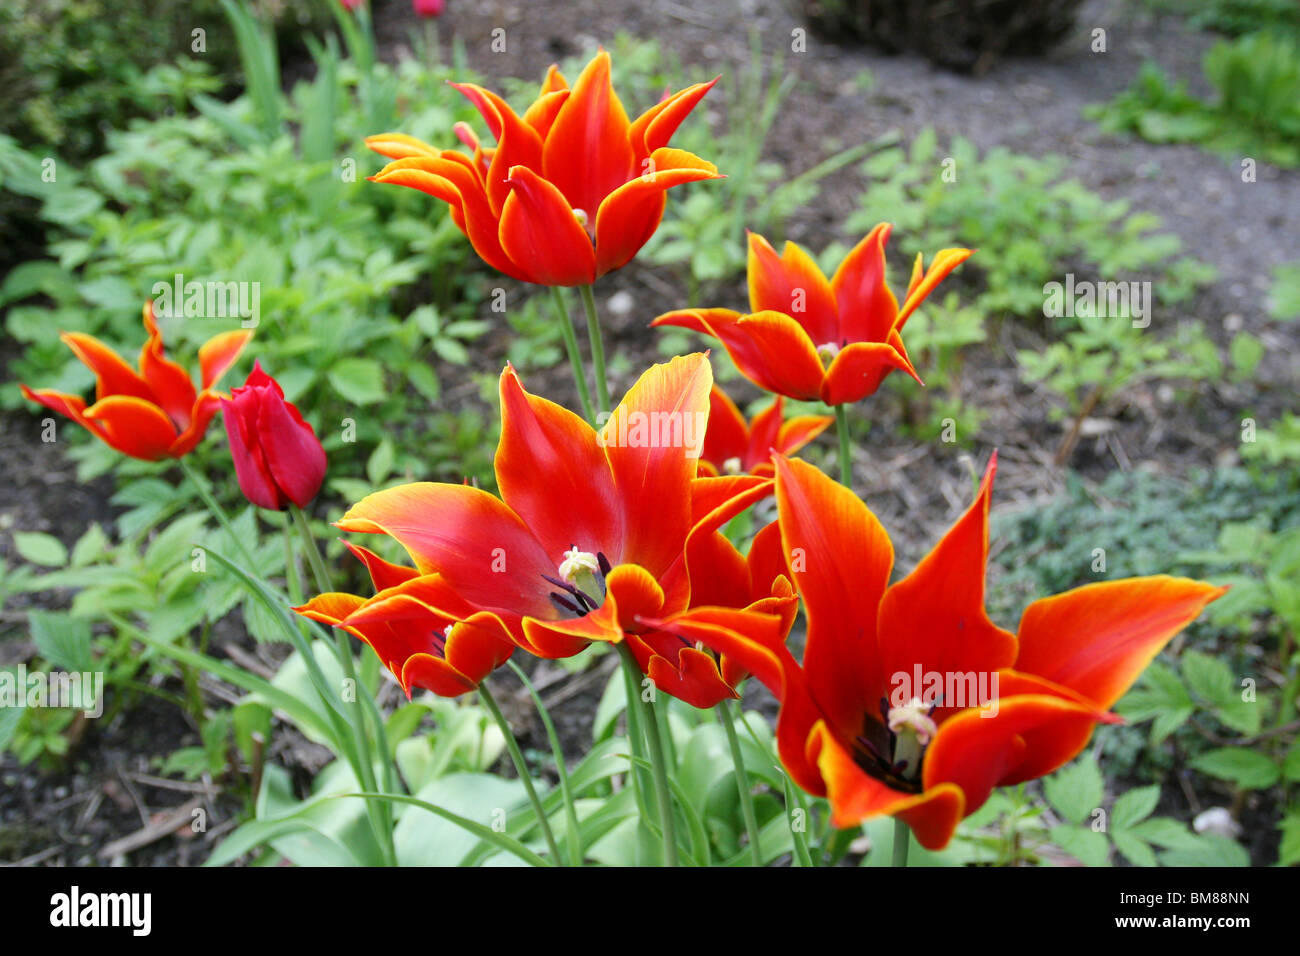 Aladdin Lily flowering tulip Stock Photo